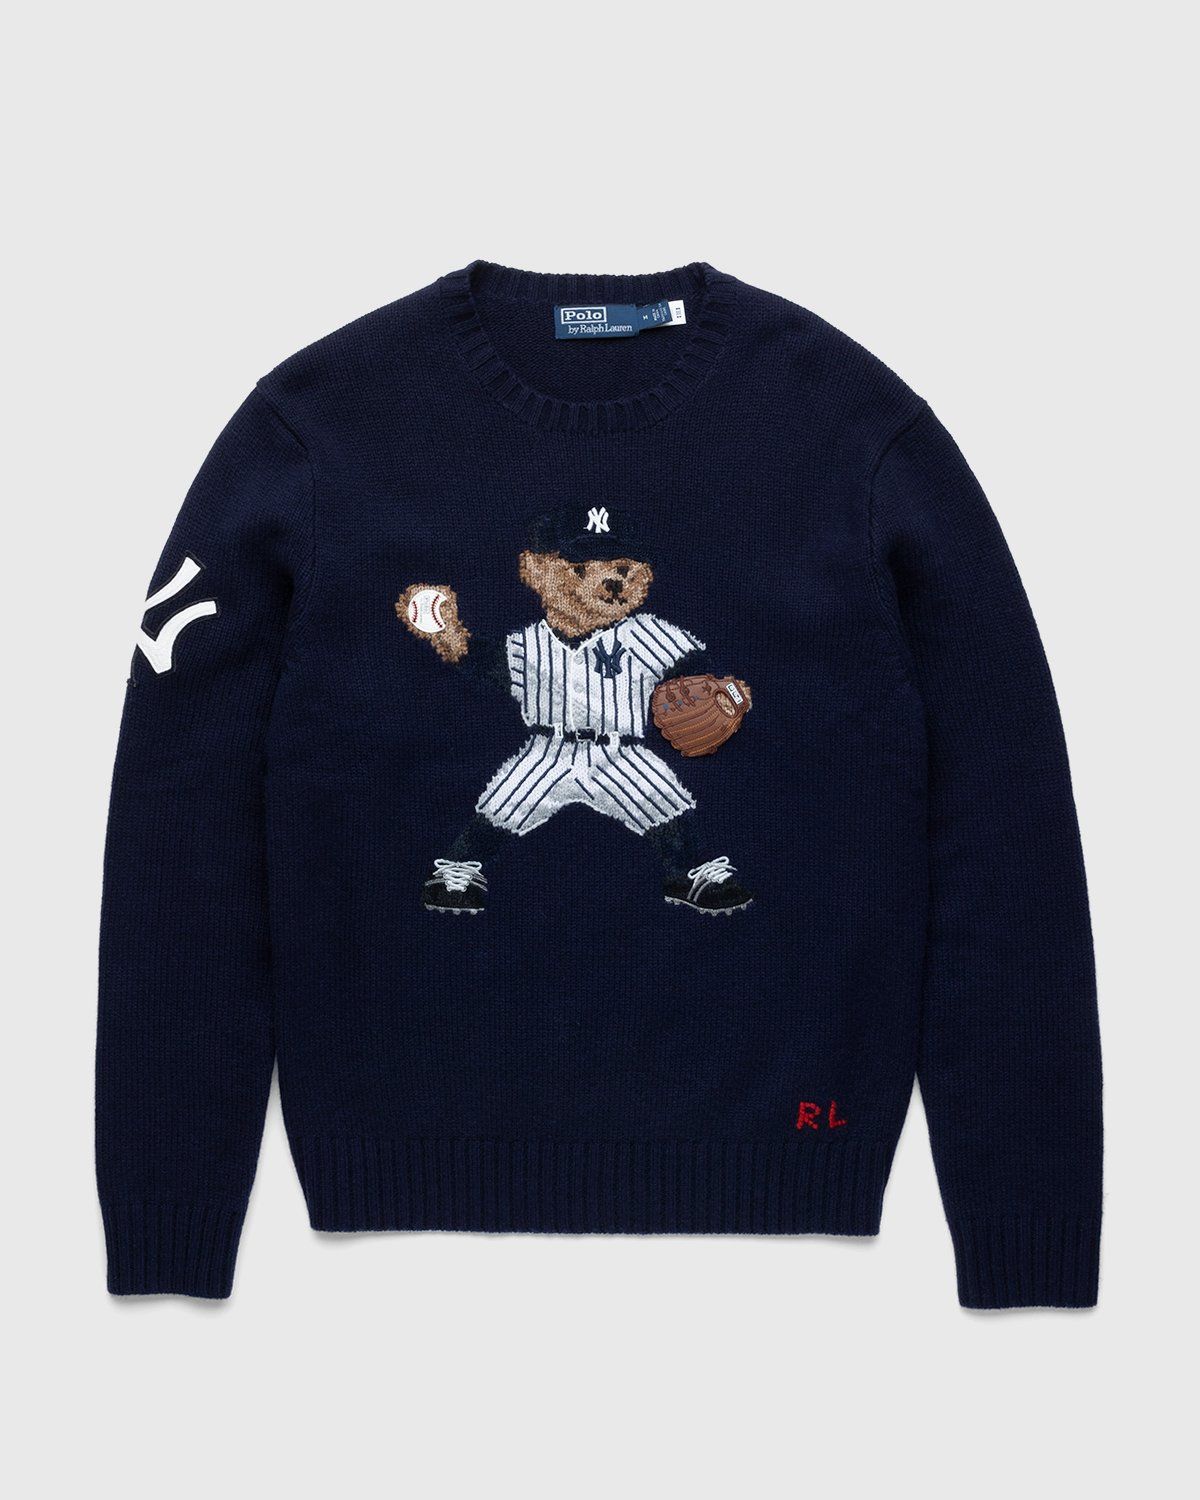 Onbepaald Antagonist milieu Ralph Lauren – Yankees Bear Sweater Navy | Highsnobiety Shop